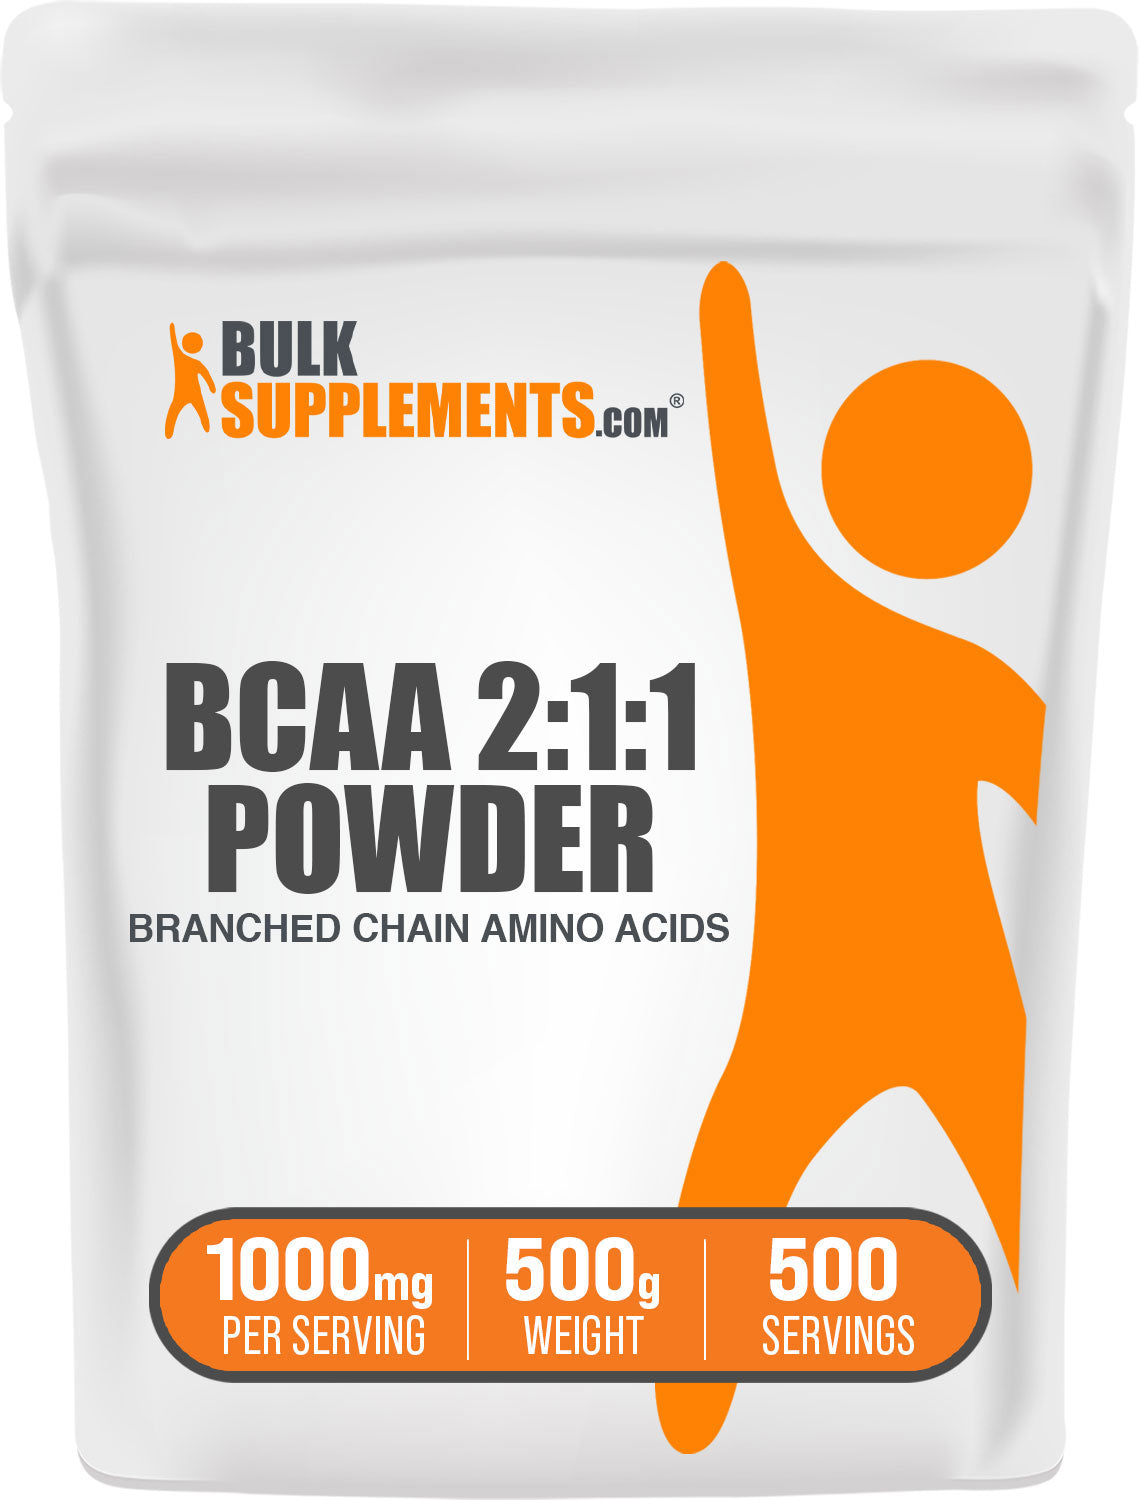 BCAA 2:1:1 Powder 500g bag